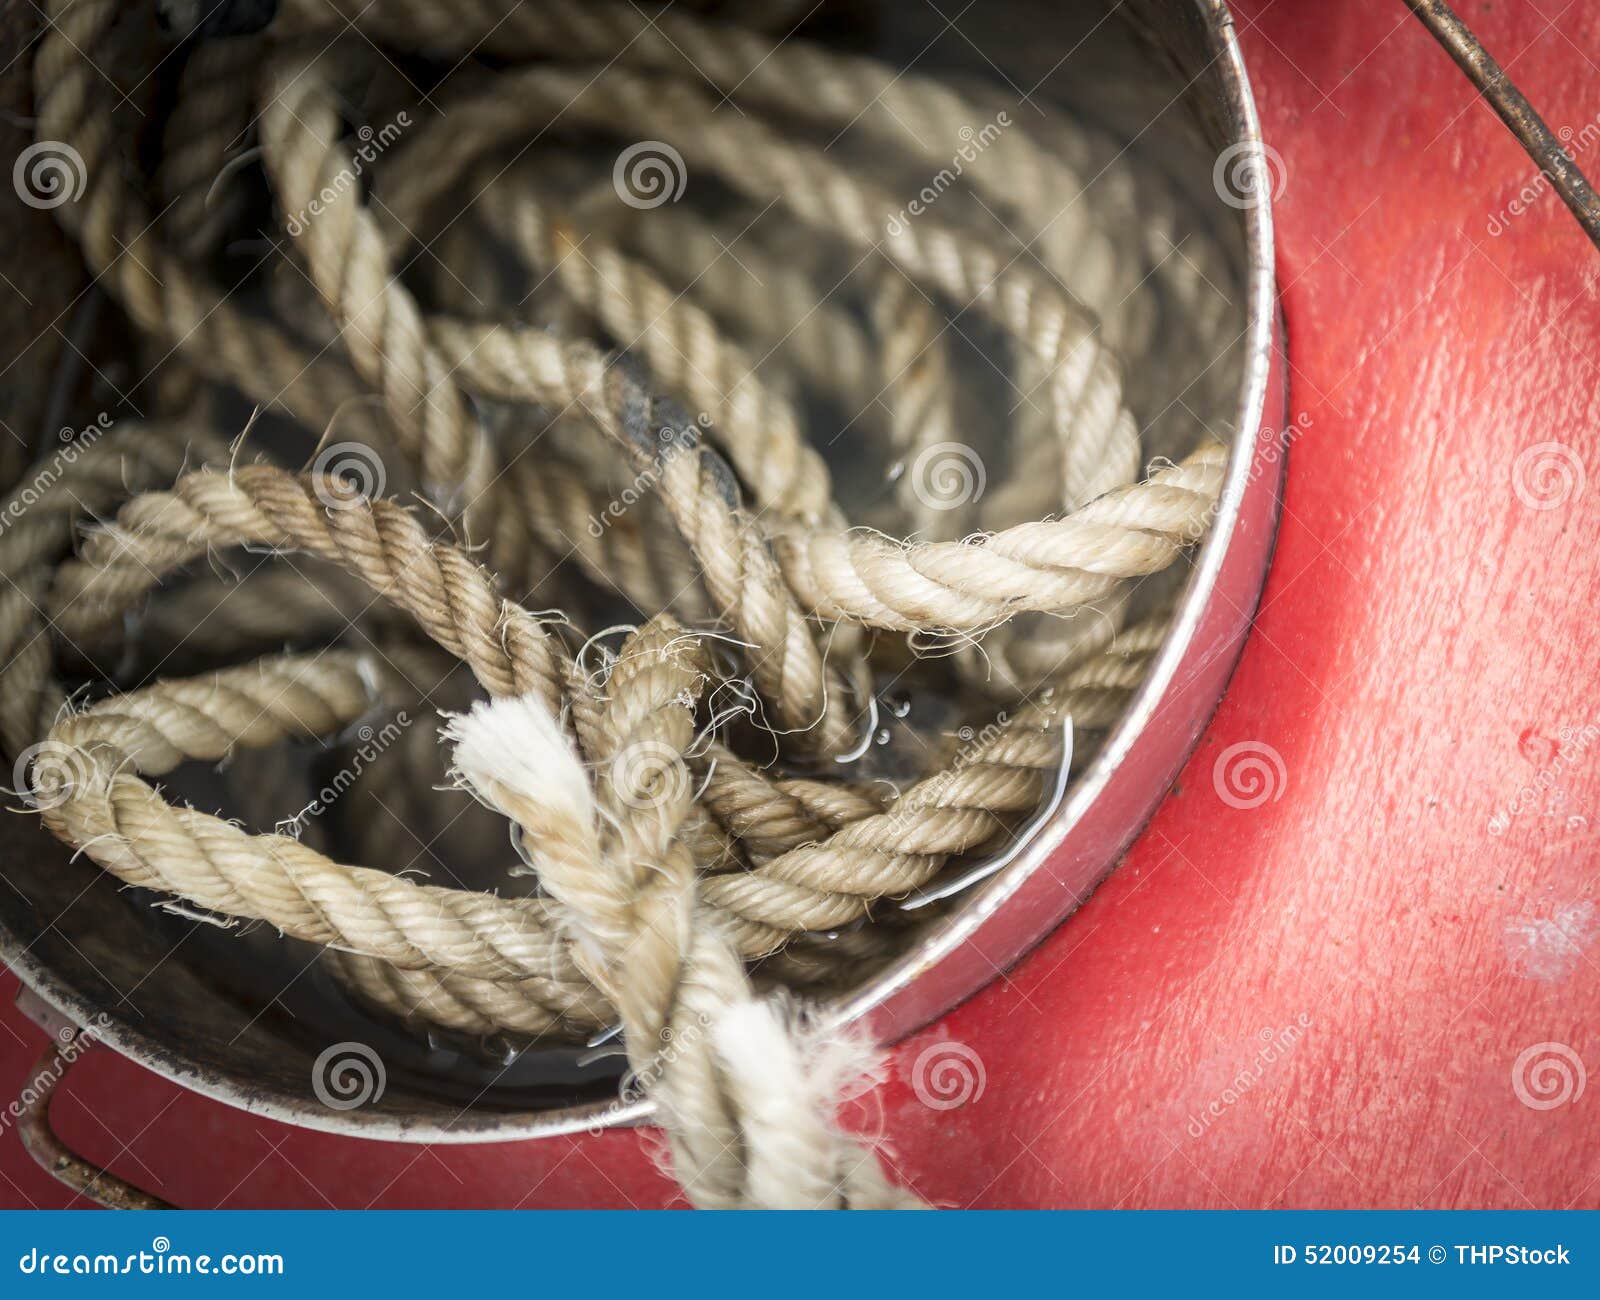 Fishing Rope stock photo. Image of bucket, marine, line - 52009254